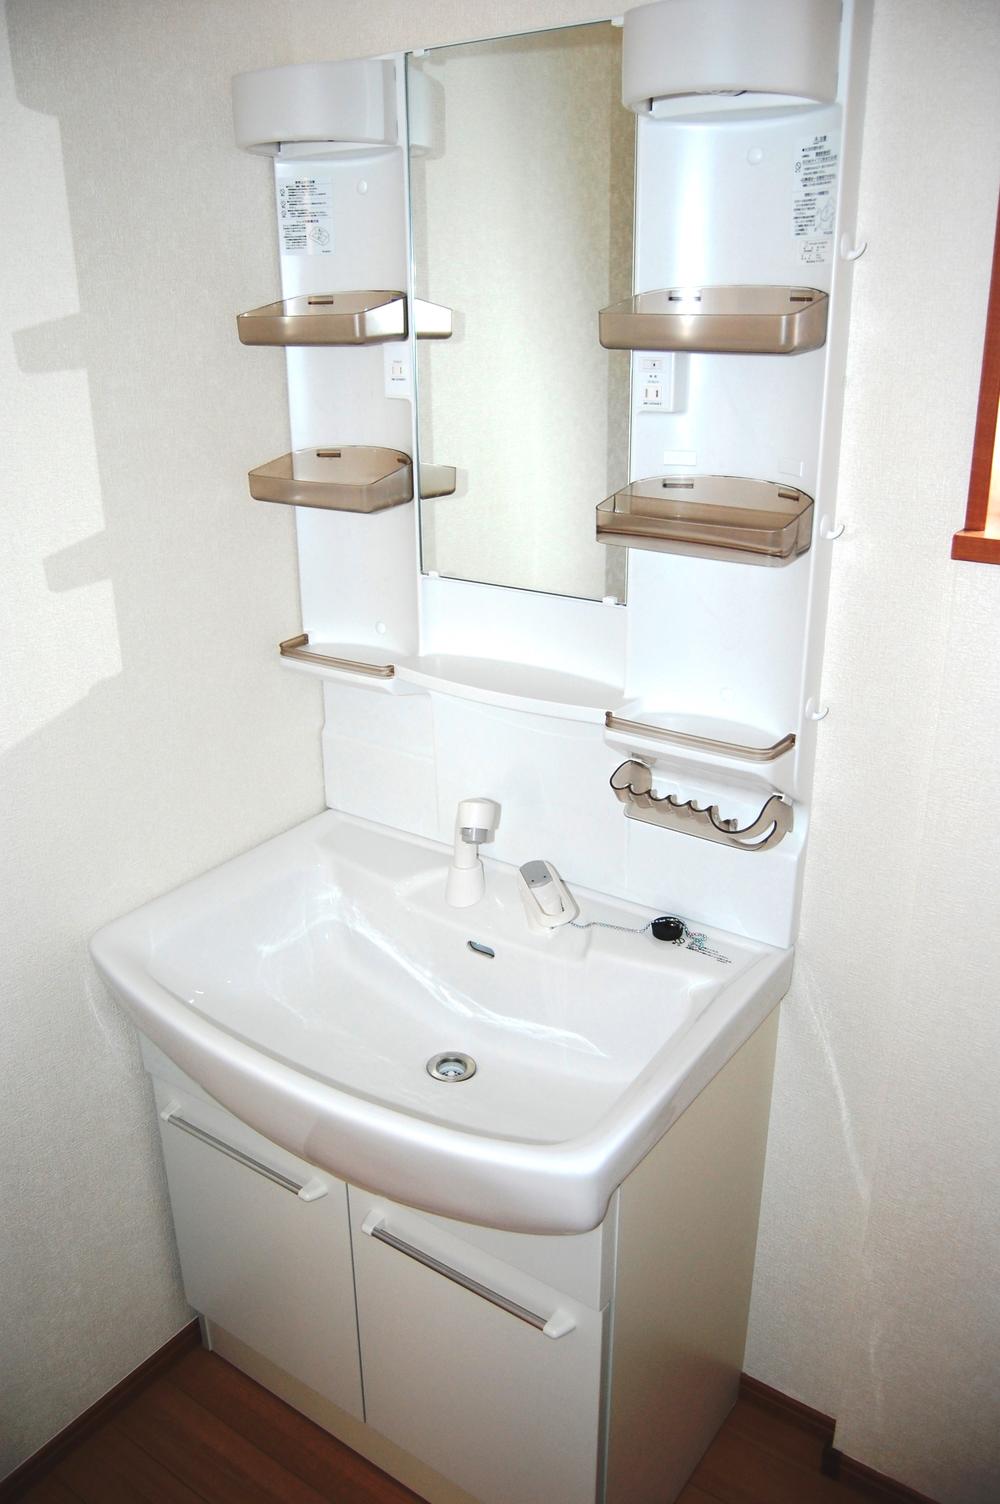 Wash basin, toilet. Same specifications Shampoo dresser